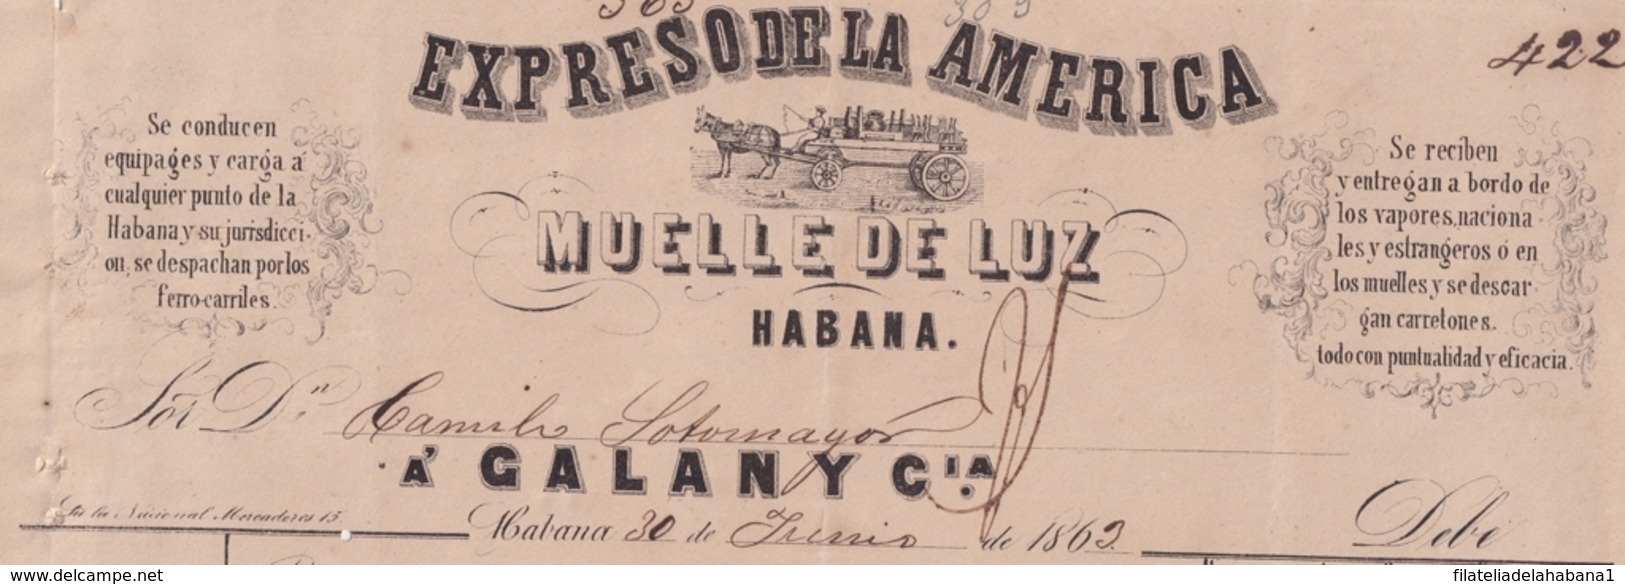 E6376 CUBA SPAIN 1863 TRANSPORT TO ARRATIA SUGAR MILLS ENGRAVING INVOICE EXPRESO DE LA AMERICA. - Manuscritos